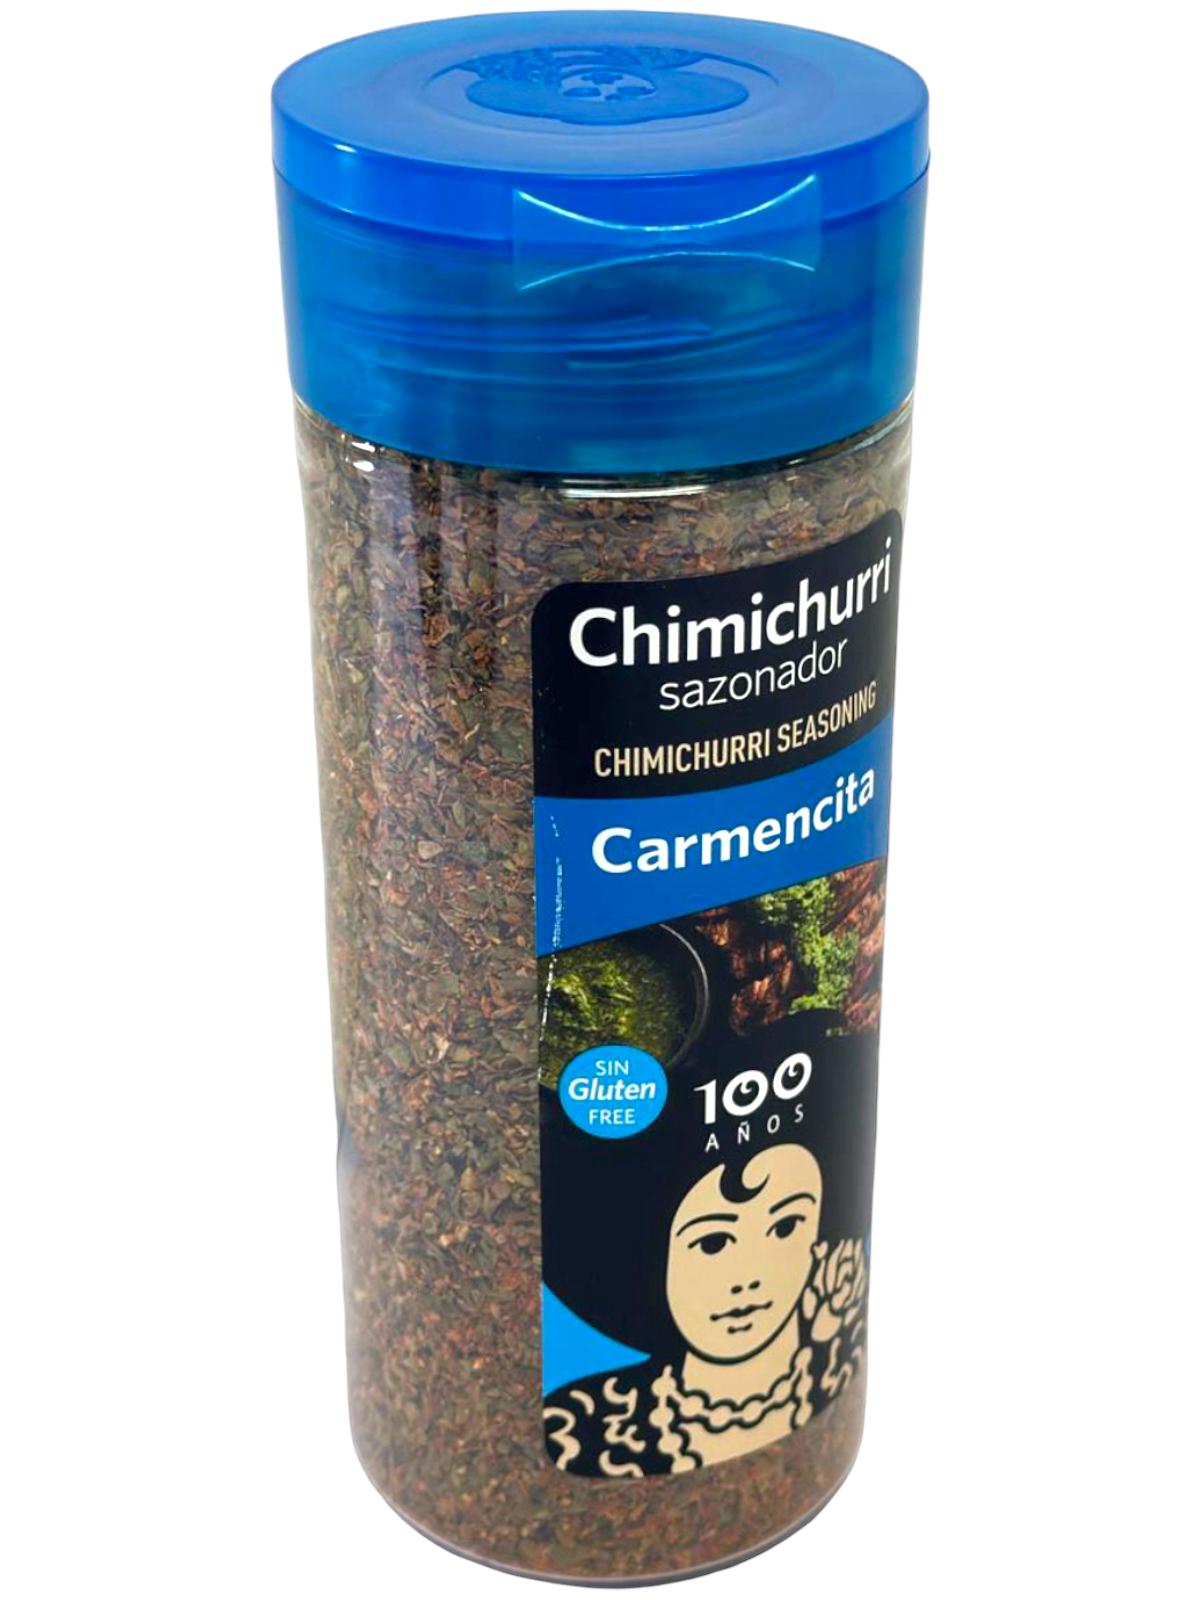 Carmencita Chimichurri Seasoning 110g